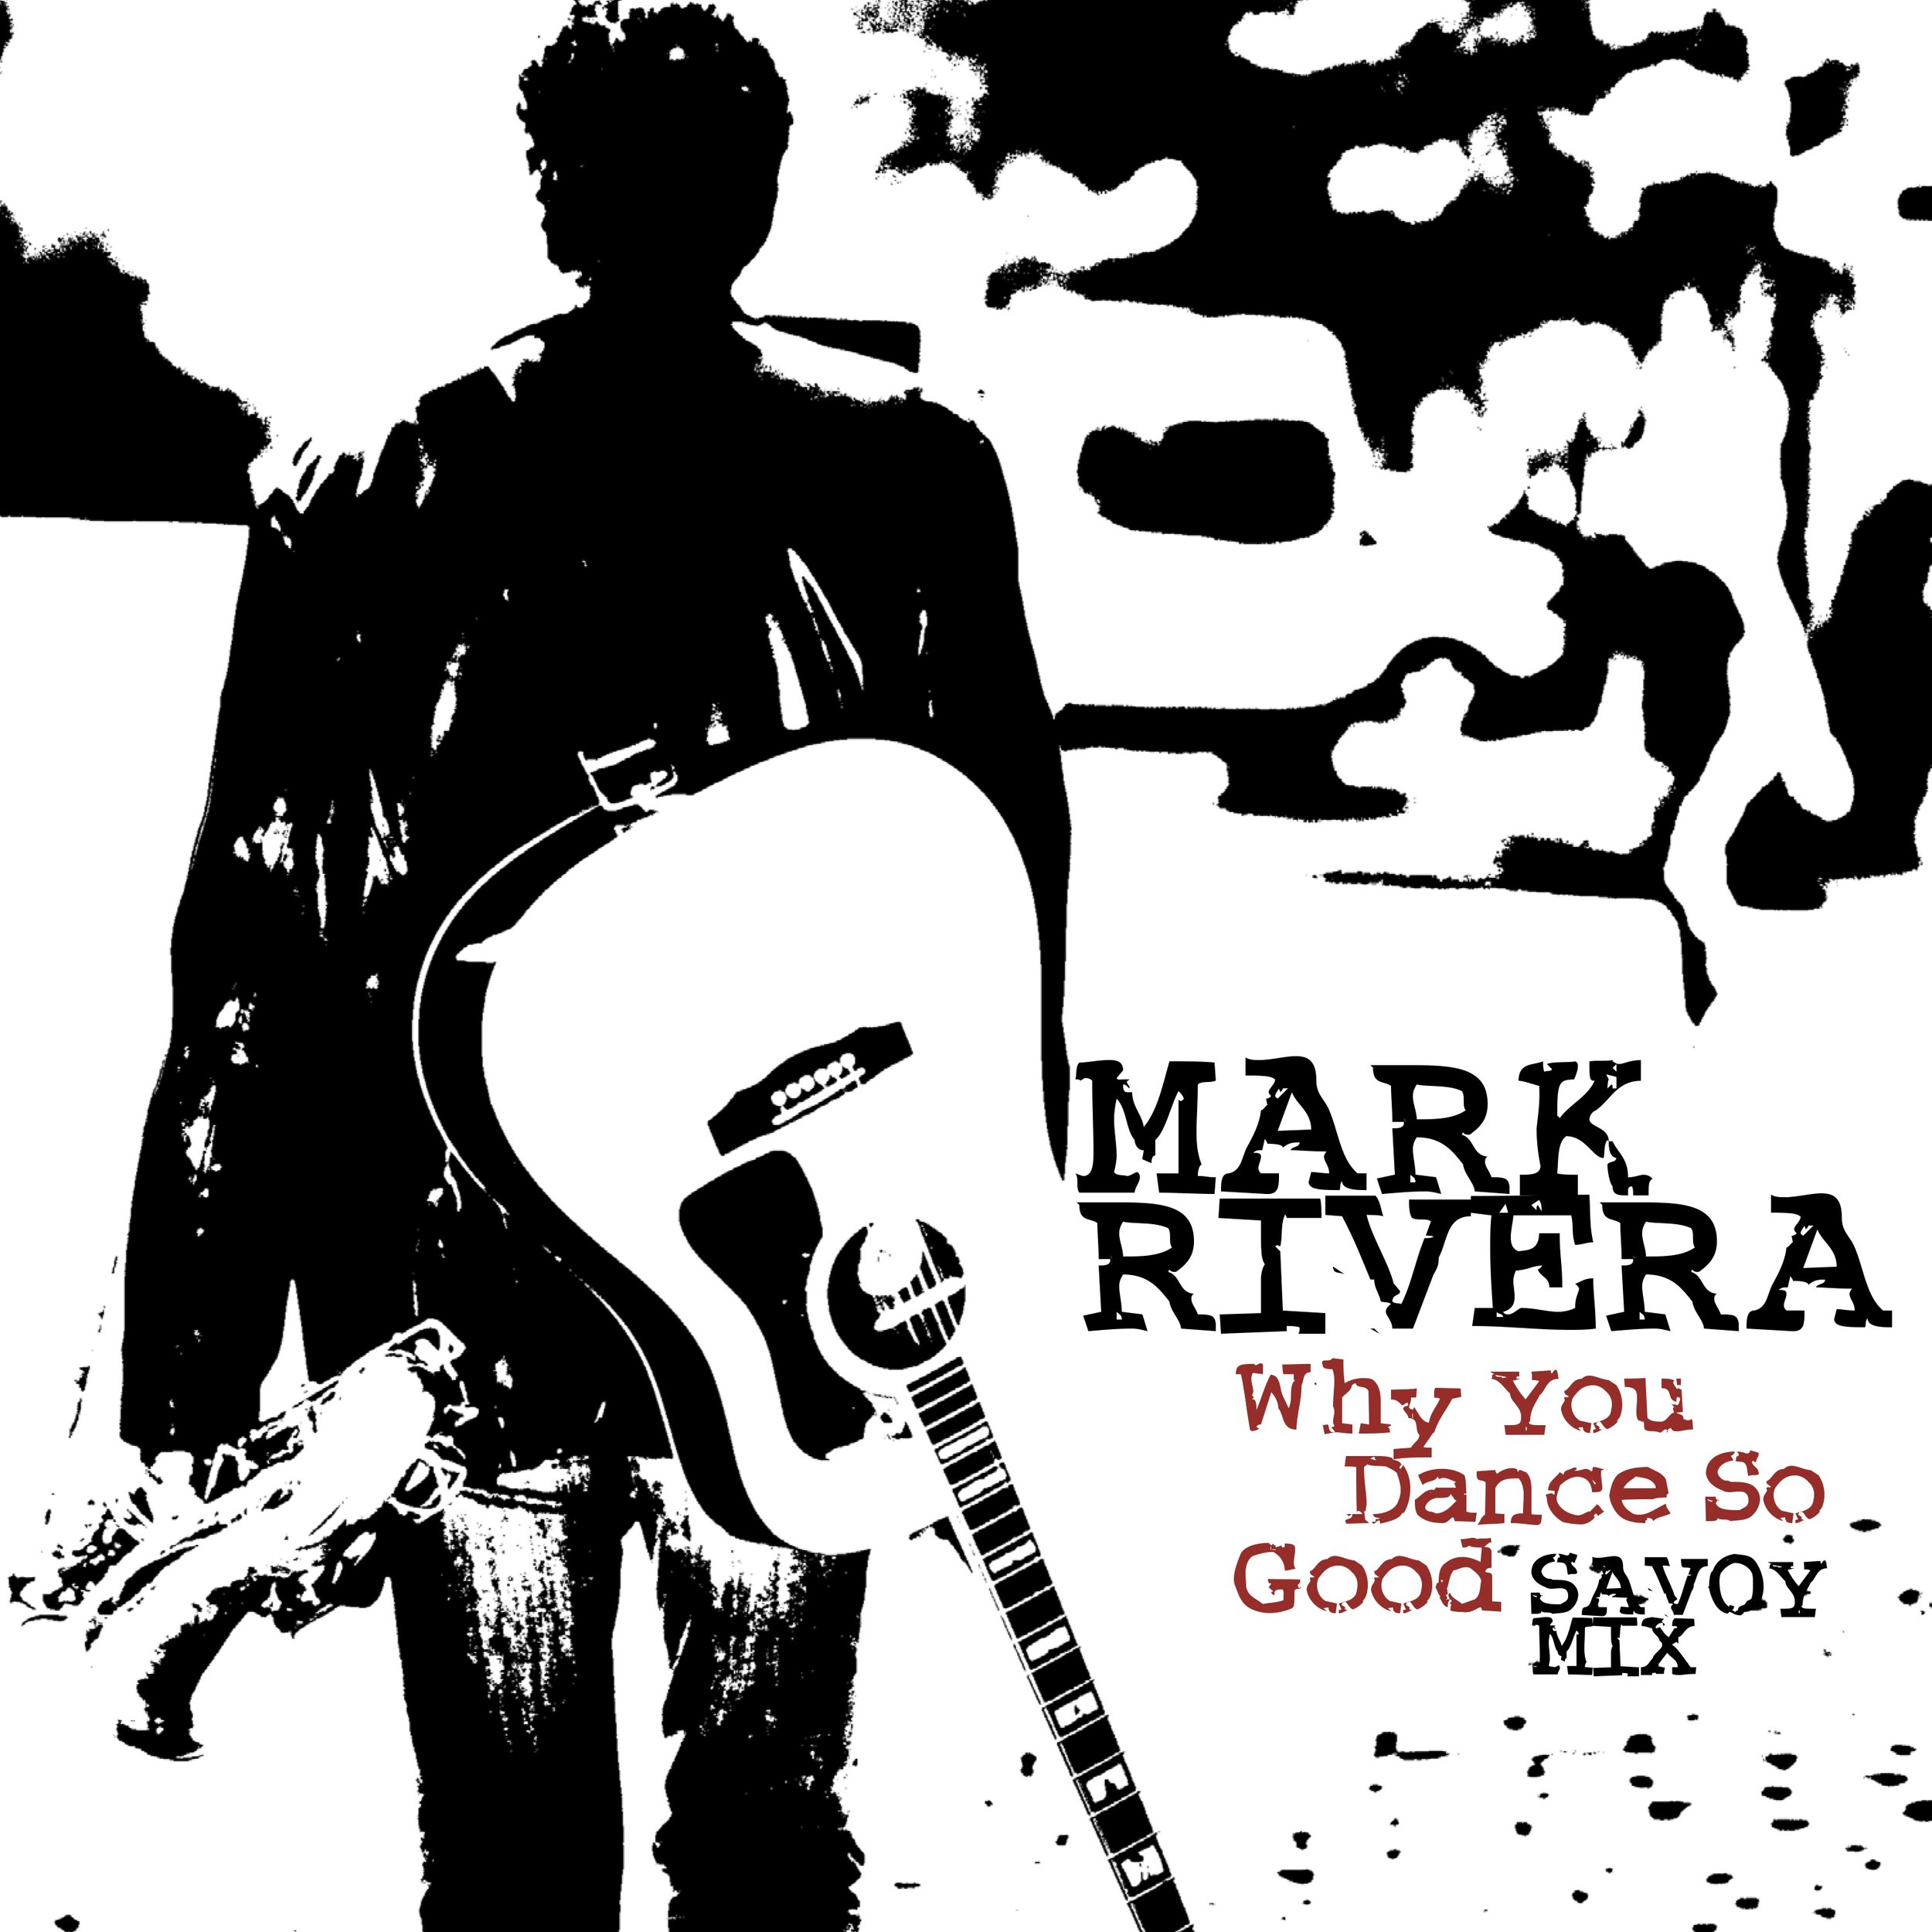 Mark Rivera - Why You Dance So Good Savoy Mix.jpg